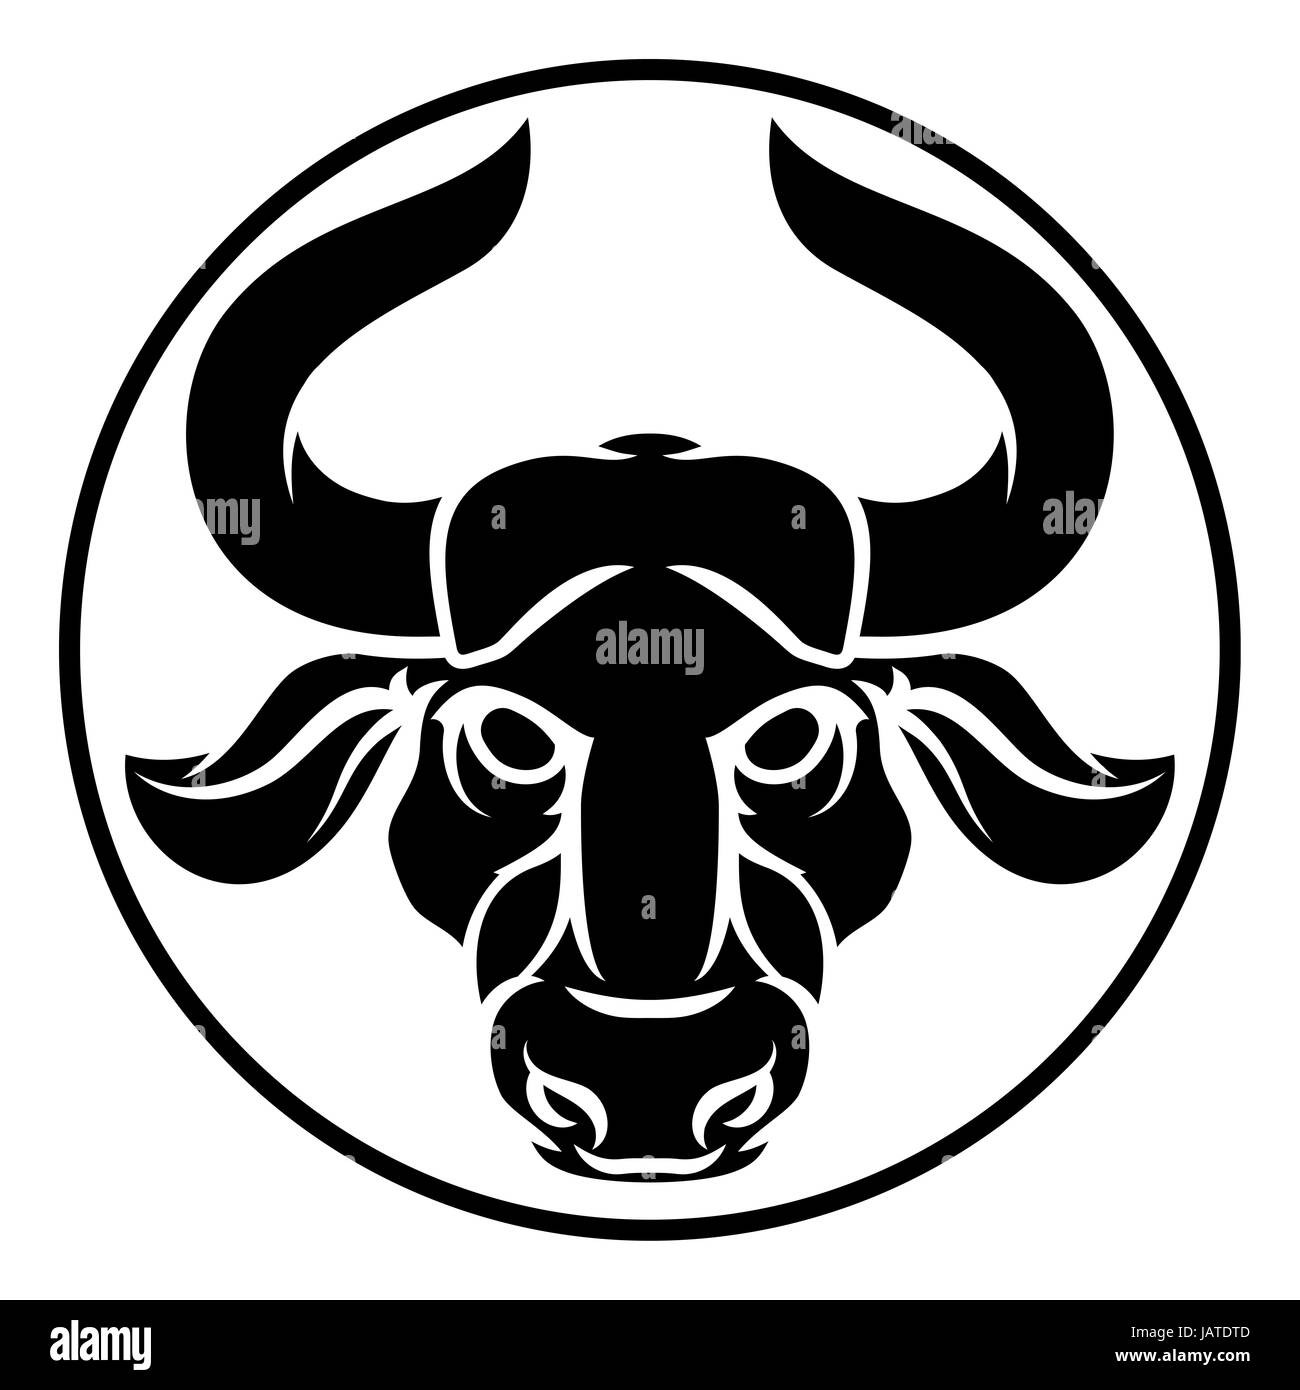 Taurus bull horoscope astrology zodiac sign symbol Stock Photo - Alamy